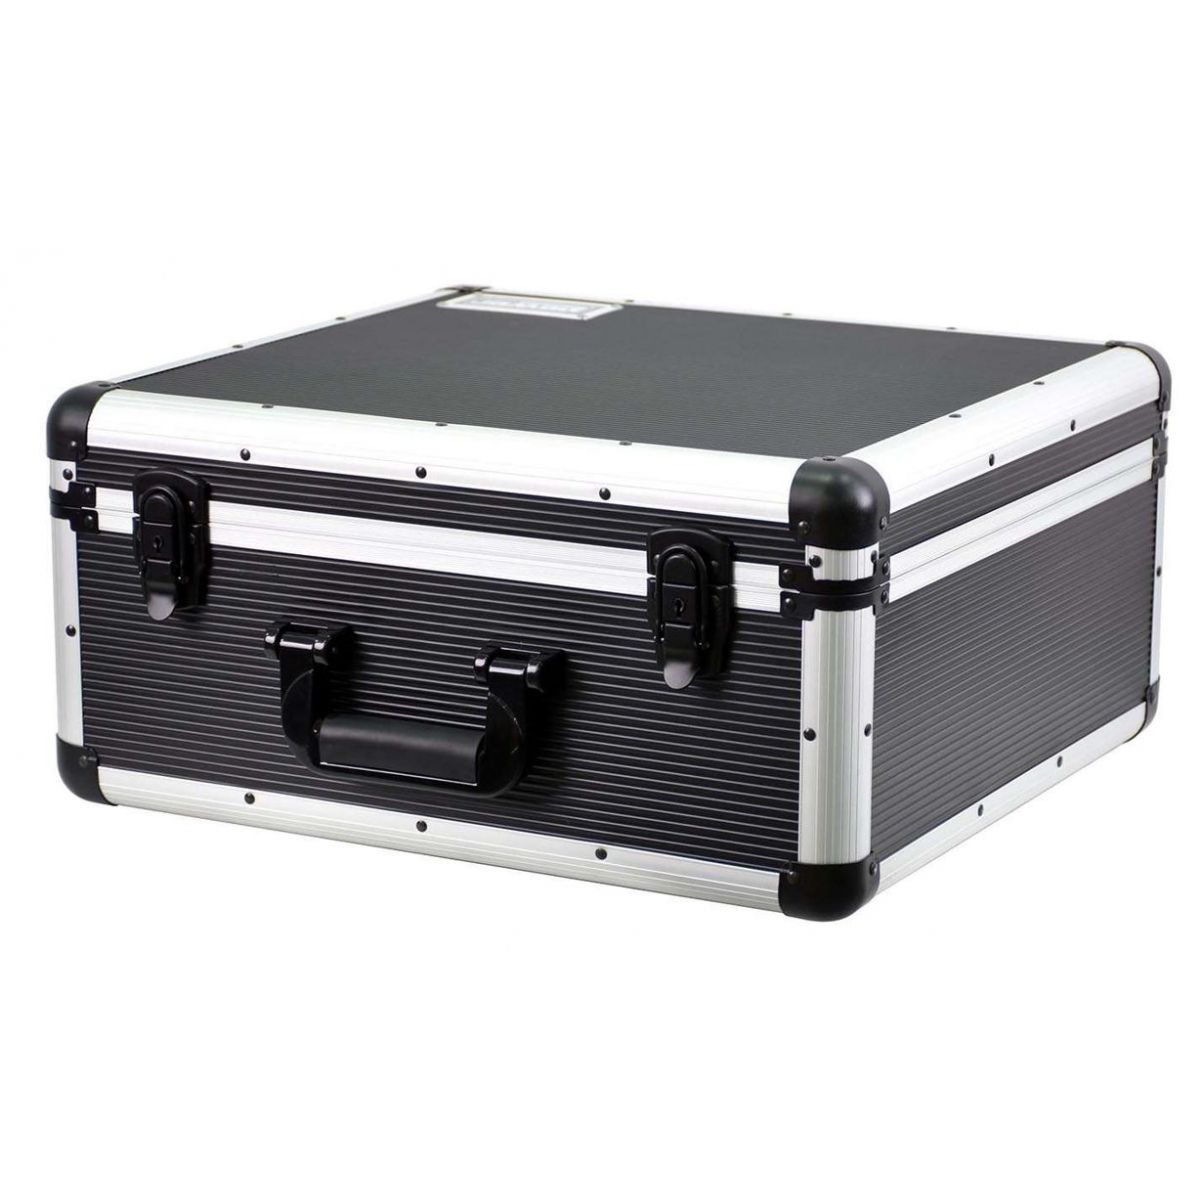 Flight cases utilitaires - Power Acoustics - Flight cases - FL Multipads V1